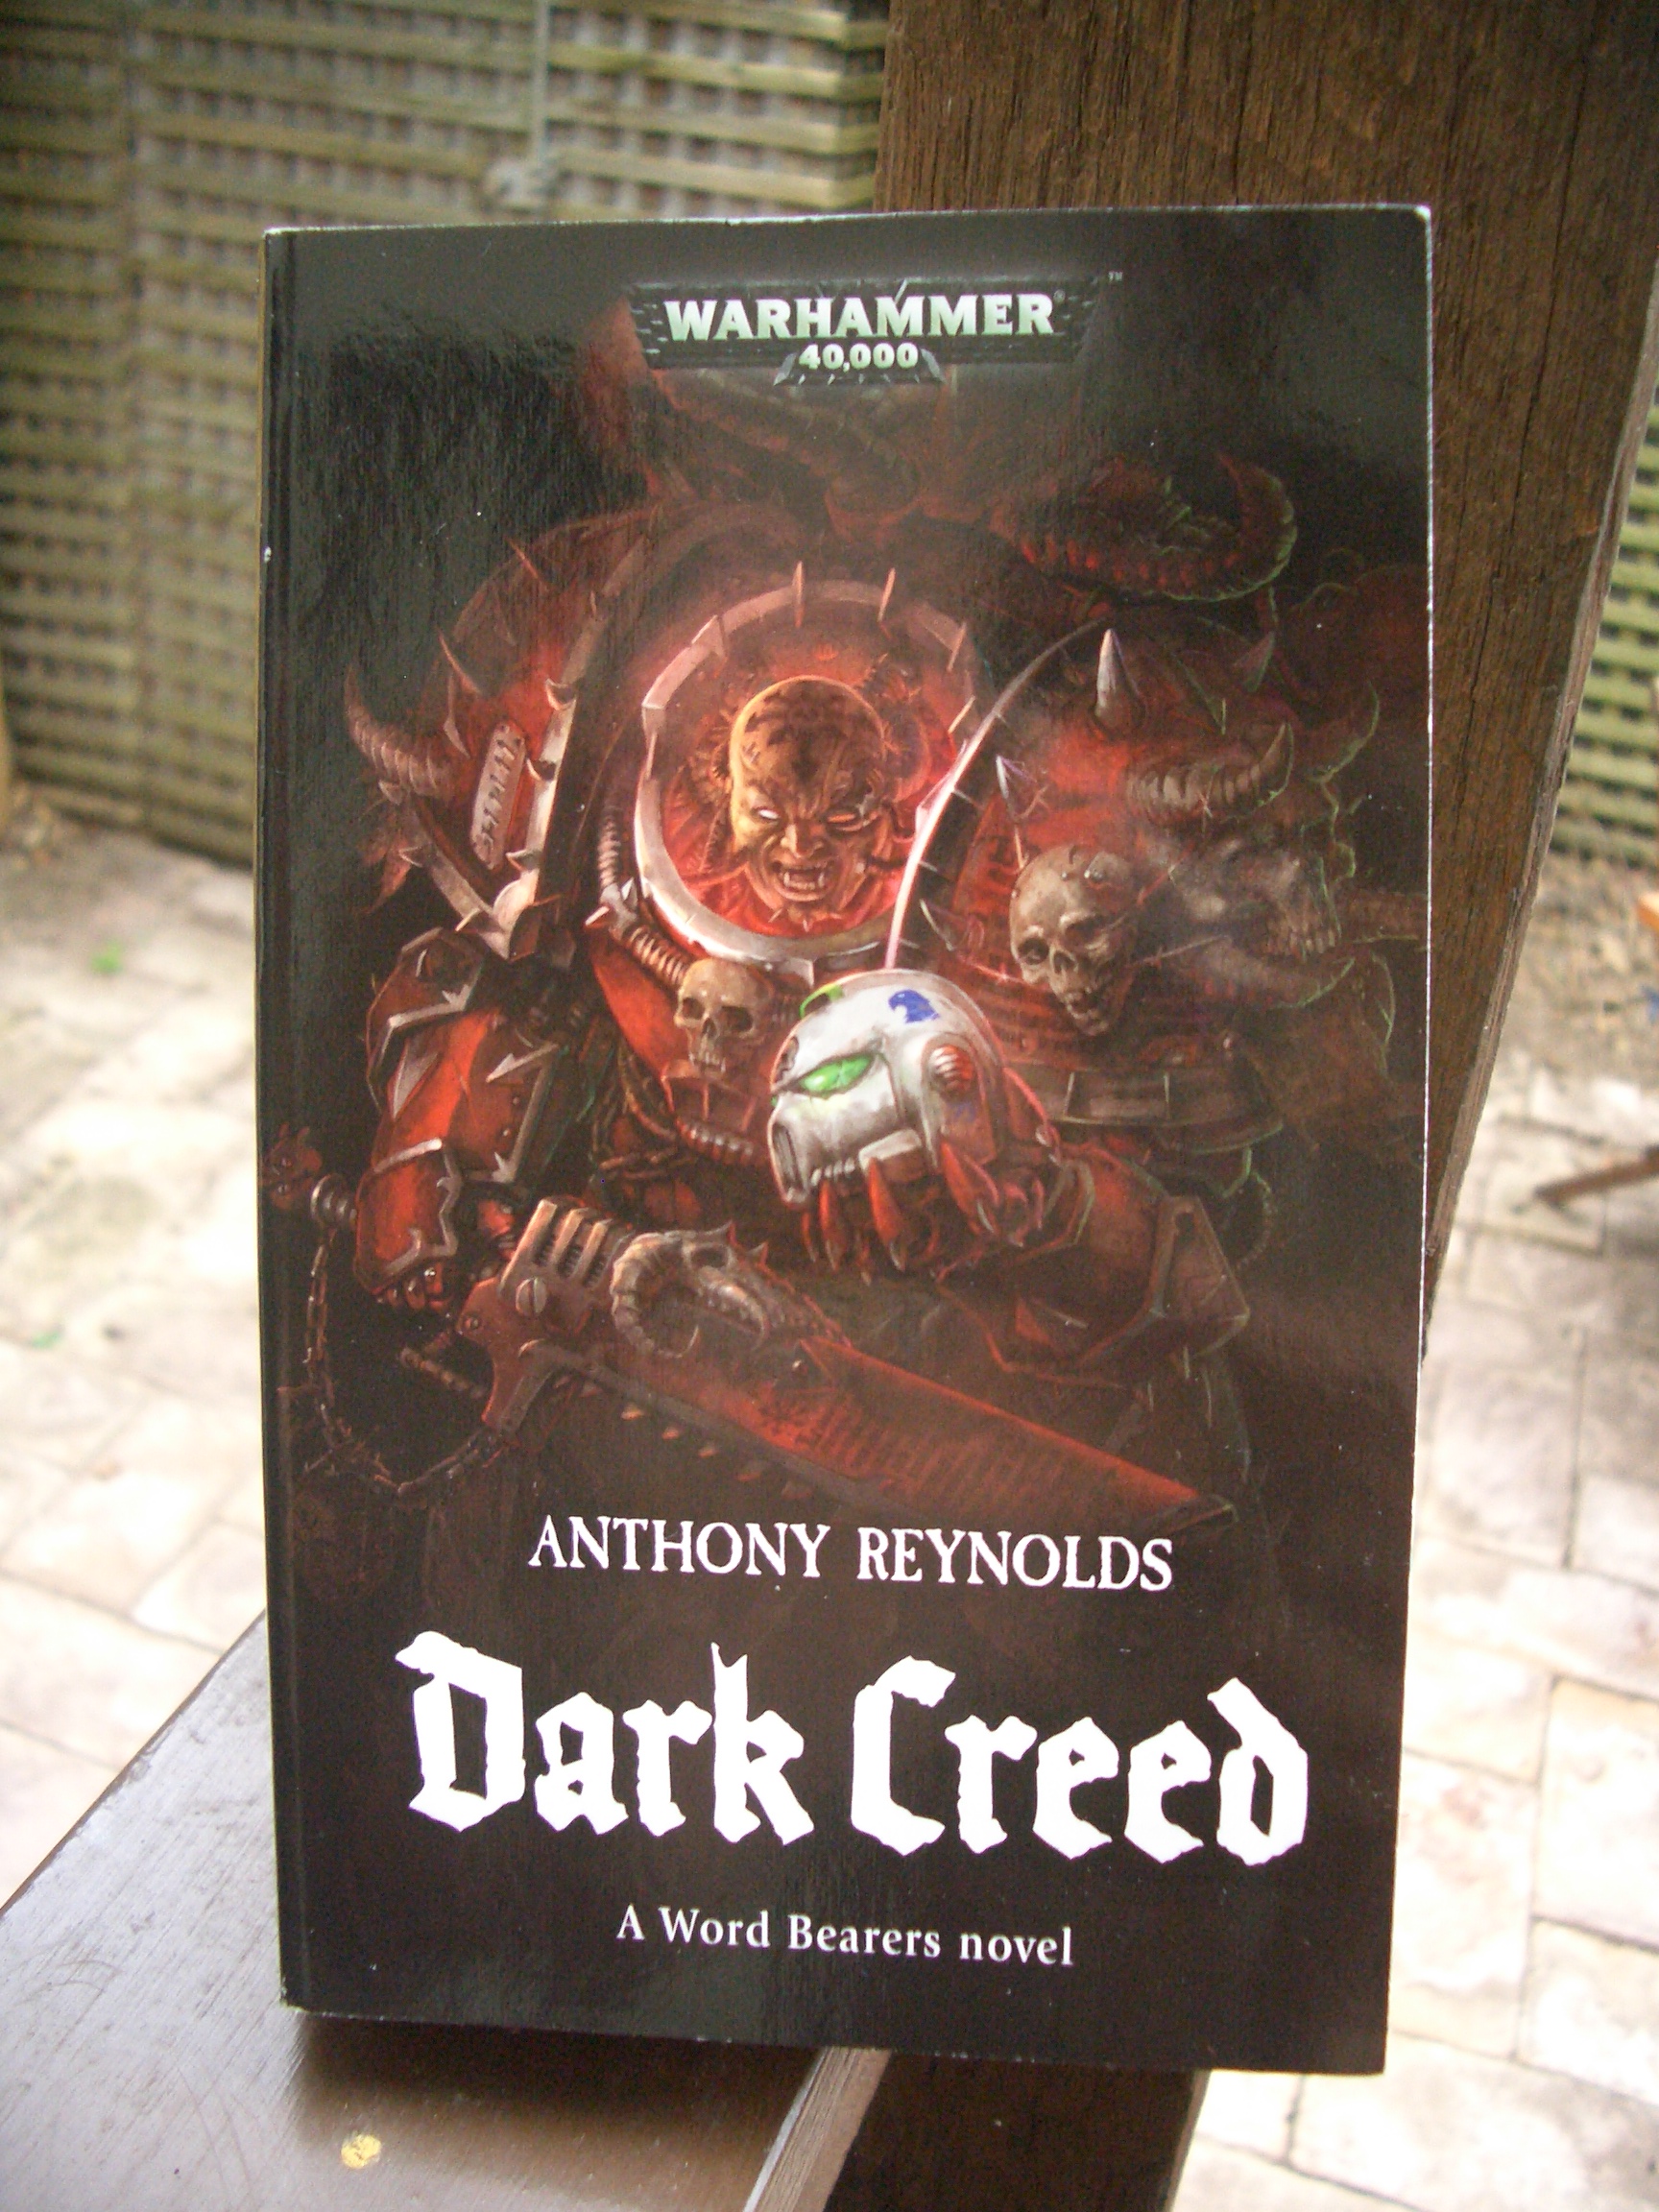 Dark Creed